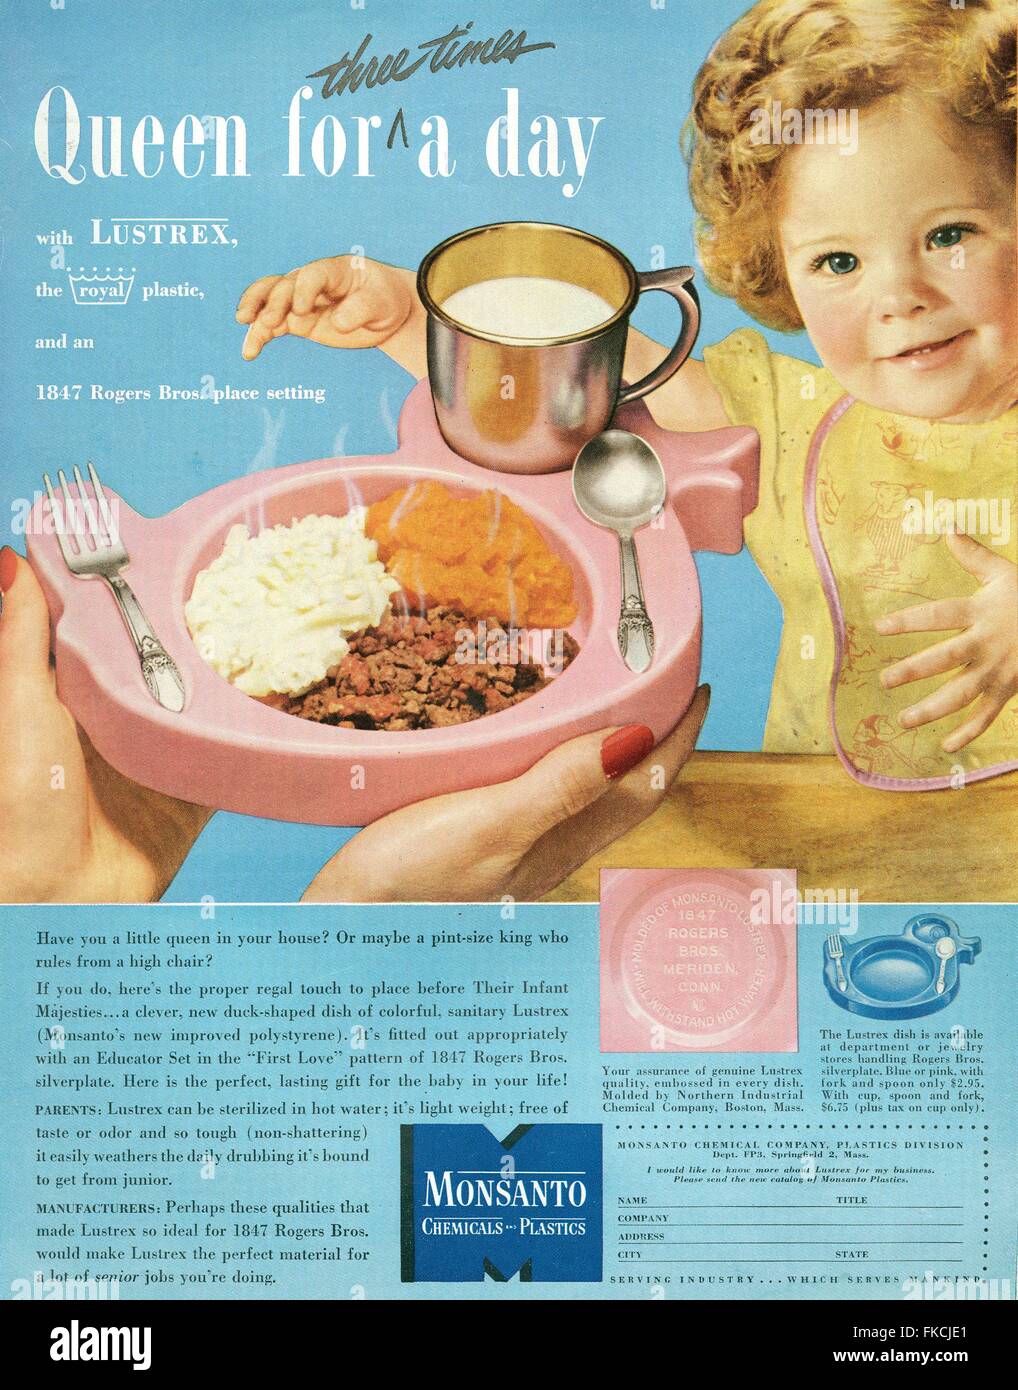 1954 SARAN WRAP Plastic Food Storage Dow Chemical Vintage Print Ad